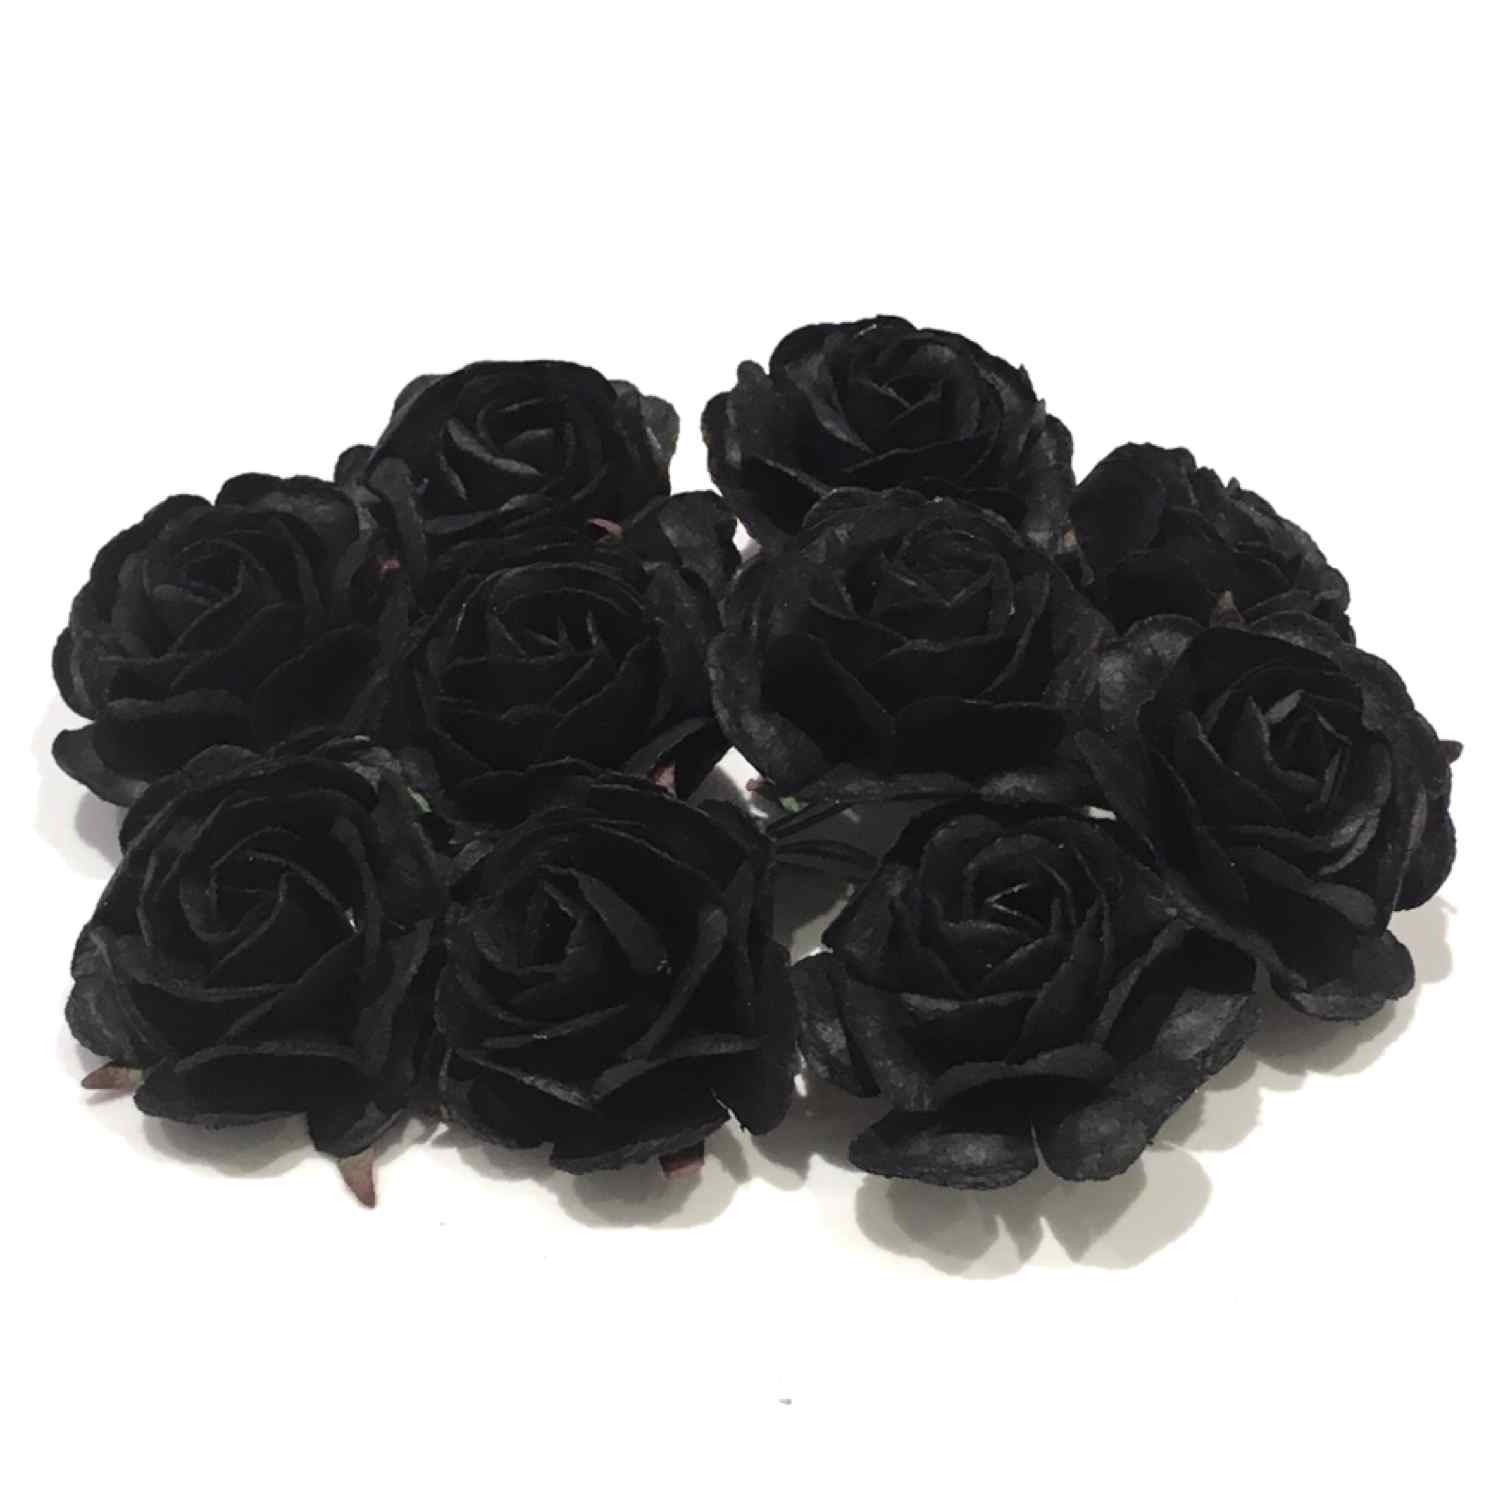 Black Heritage Mulberry Paper Roses HR009